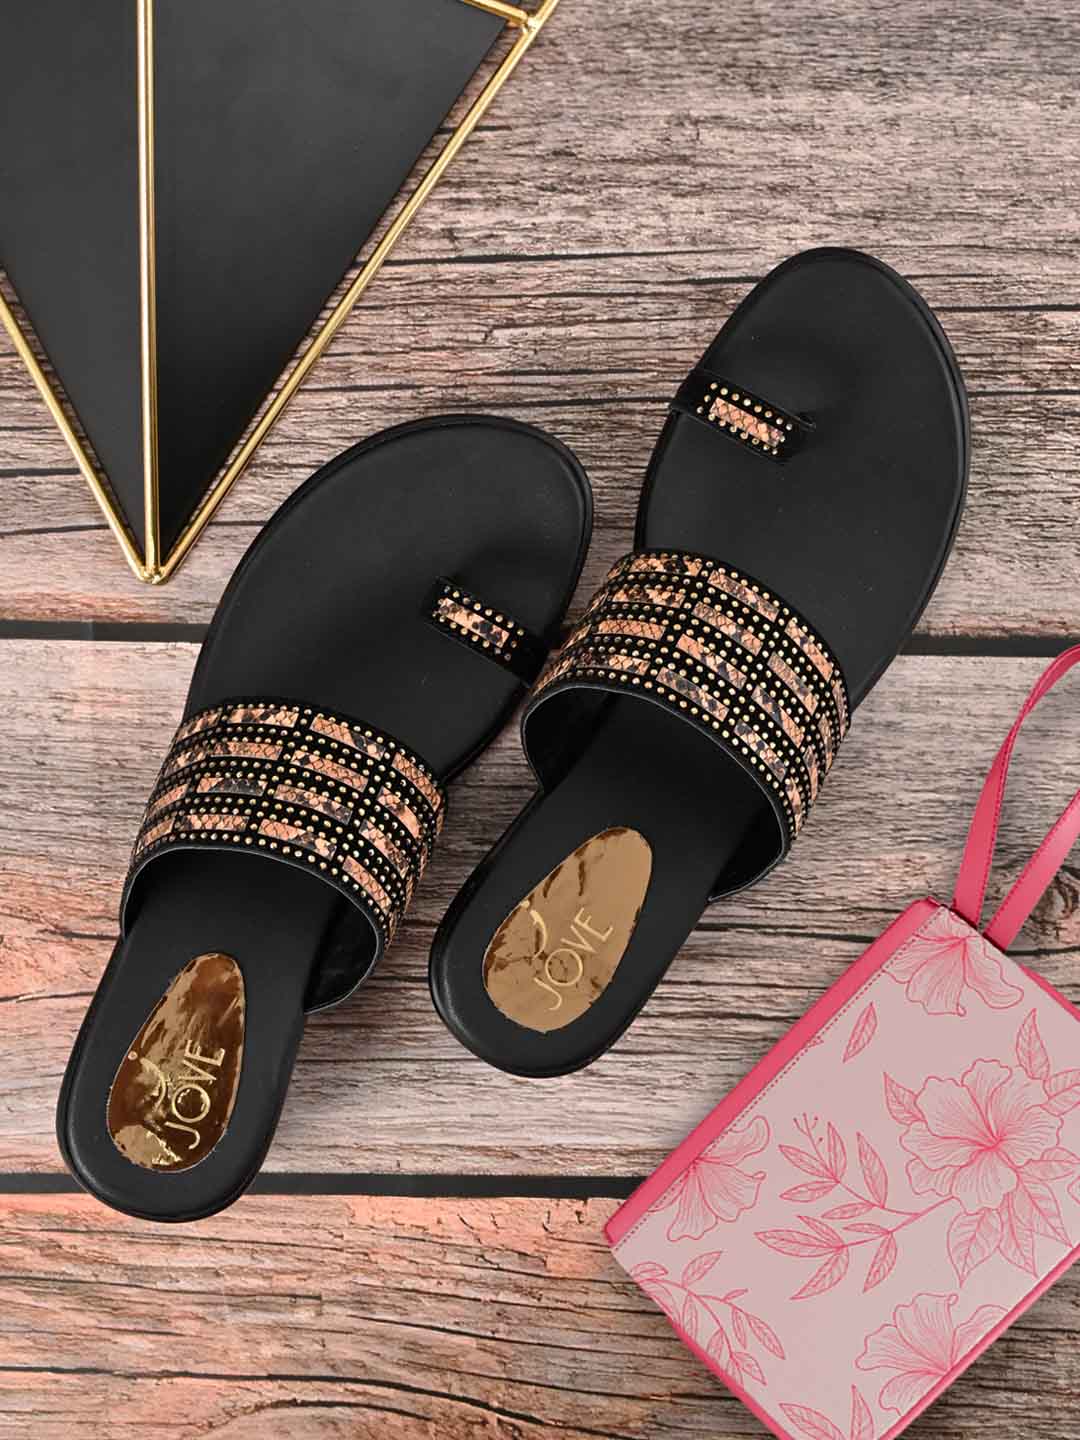 Copper Footwear Heels Sandals - Buy Copper Footwear Heels Sandals online in  India